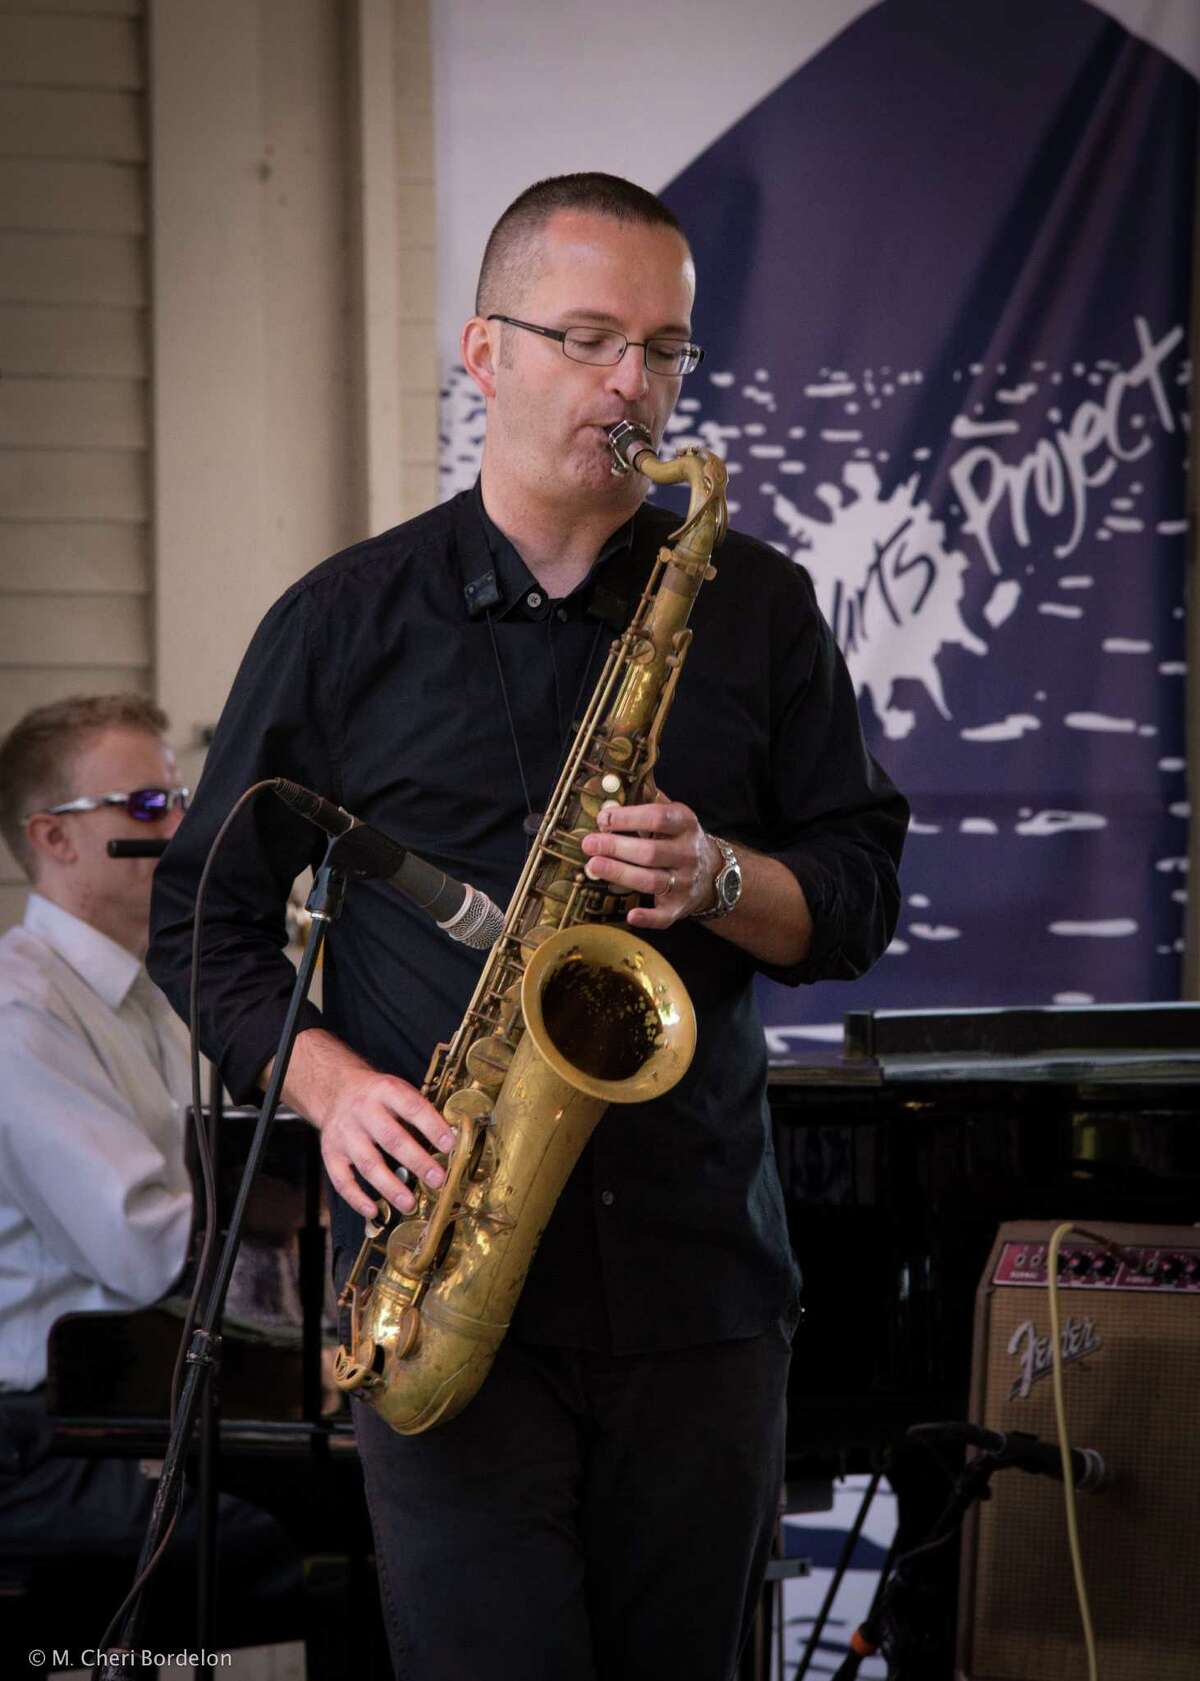 Brian Patneaude at Lake George Jazz Festival last fall. Photo archive/M Cheri Bordelon